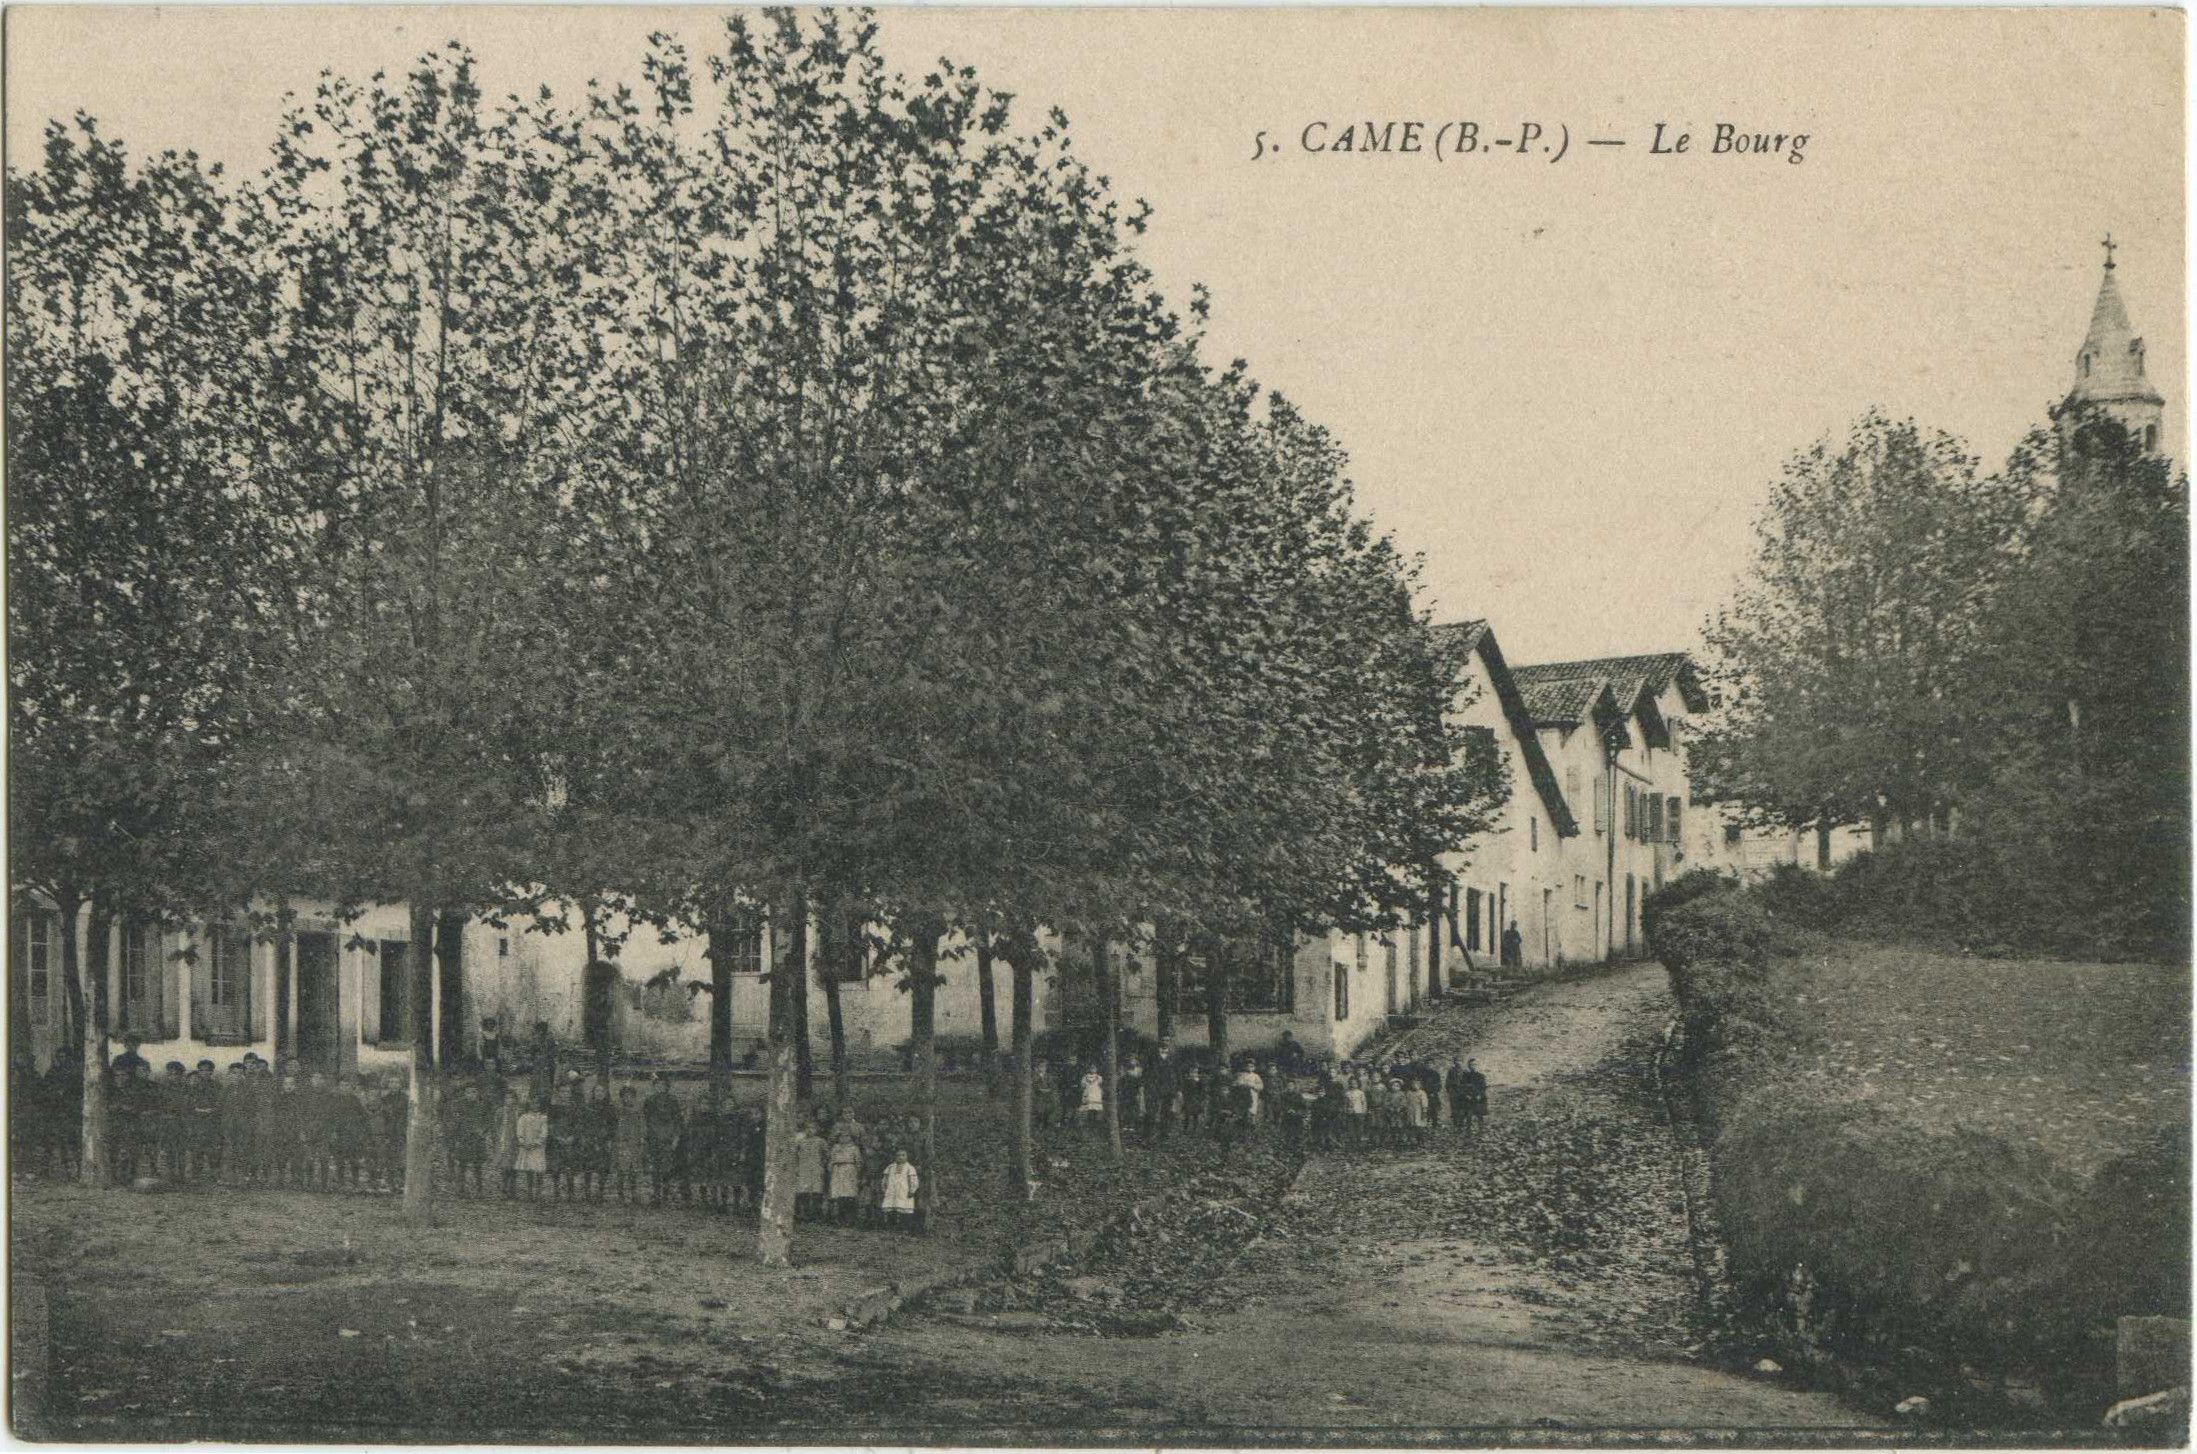 Came - Le Bourg